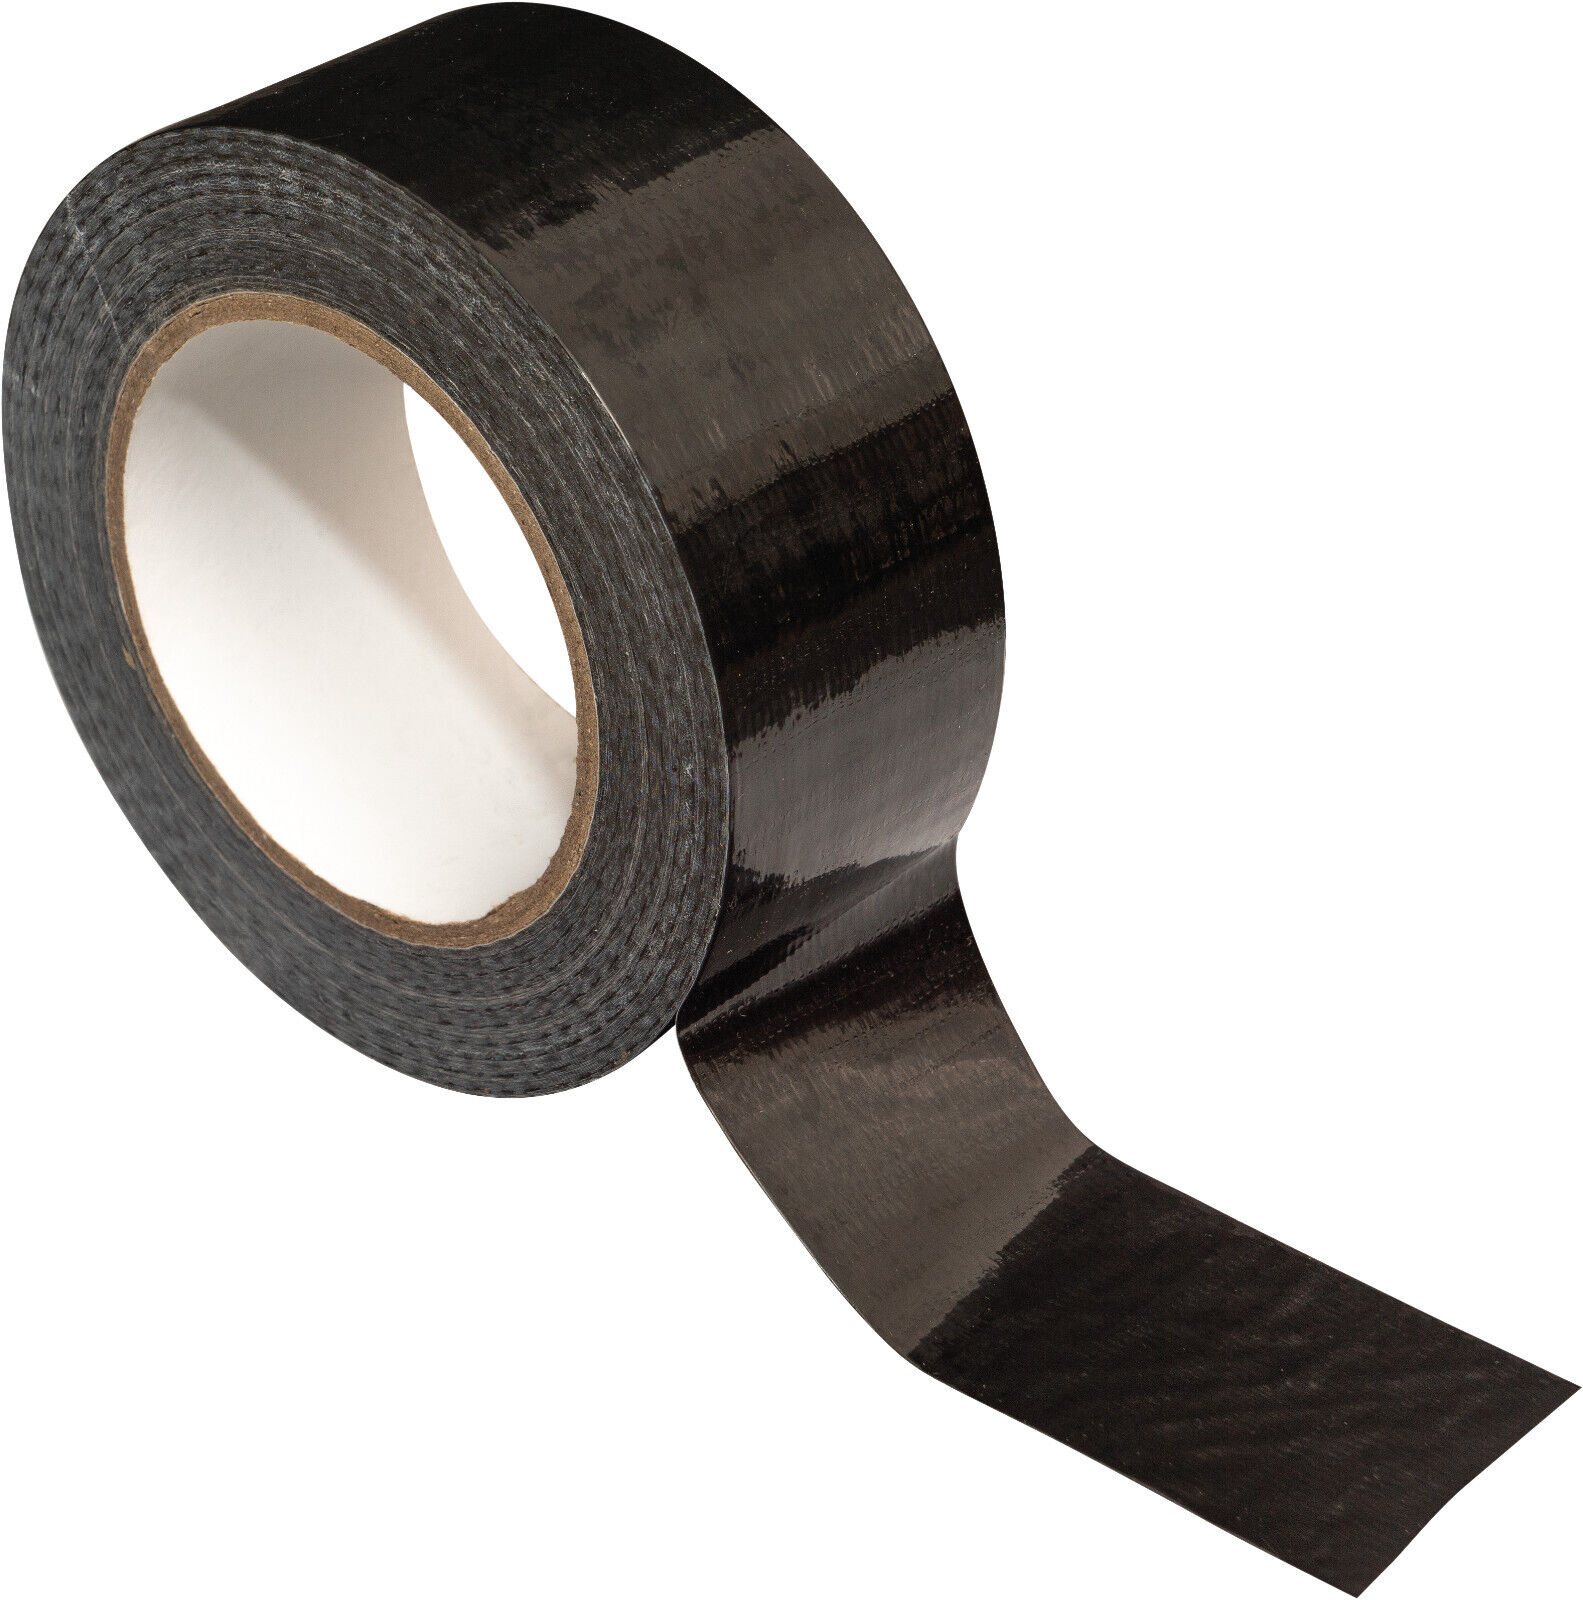 General Purpose Duct Tape 75mm x 50m Black